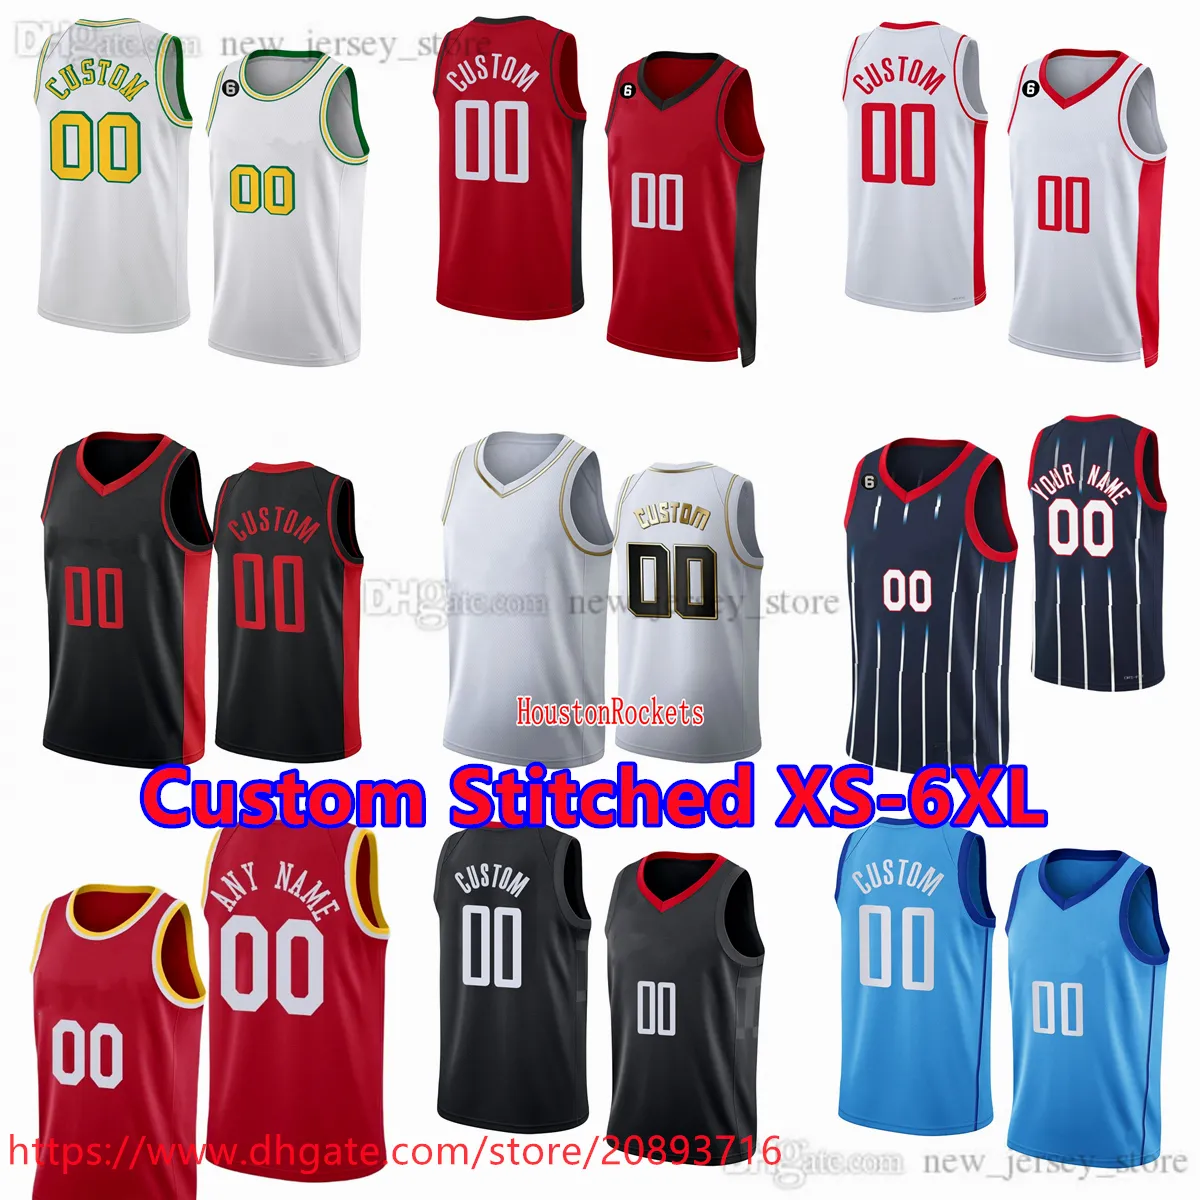 Custom Stitched XS-6XL Basketball Jersey 4 JalenGreen 10 JabariSmith Jr. 17 TariEason 28 AlperenSengun 16 UsmanGaruba 3 KevinPorter 9 JoshChristopher Jerseys